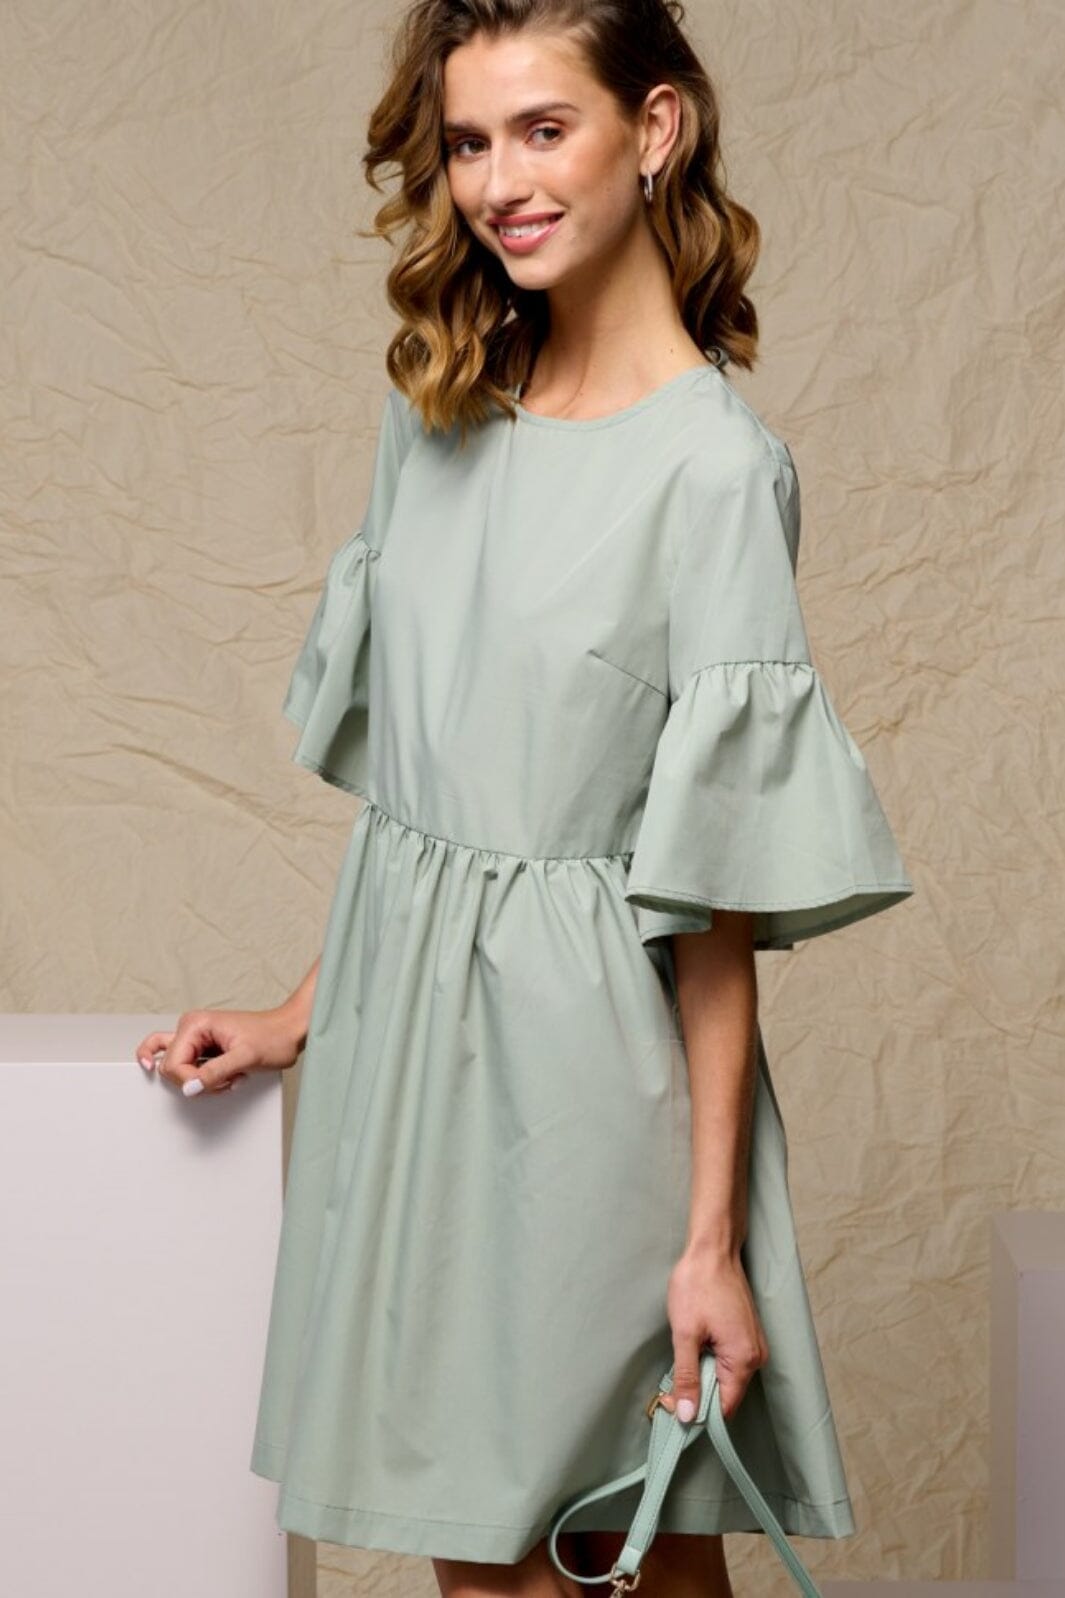 Noella - Adaleide Dress - 1147 Green Pastel Kjoler 